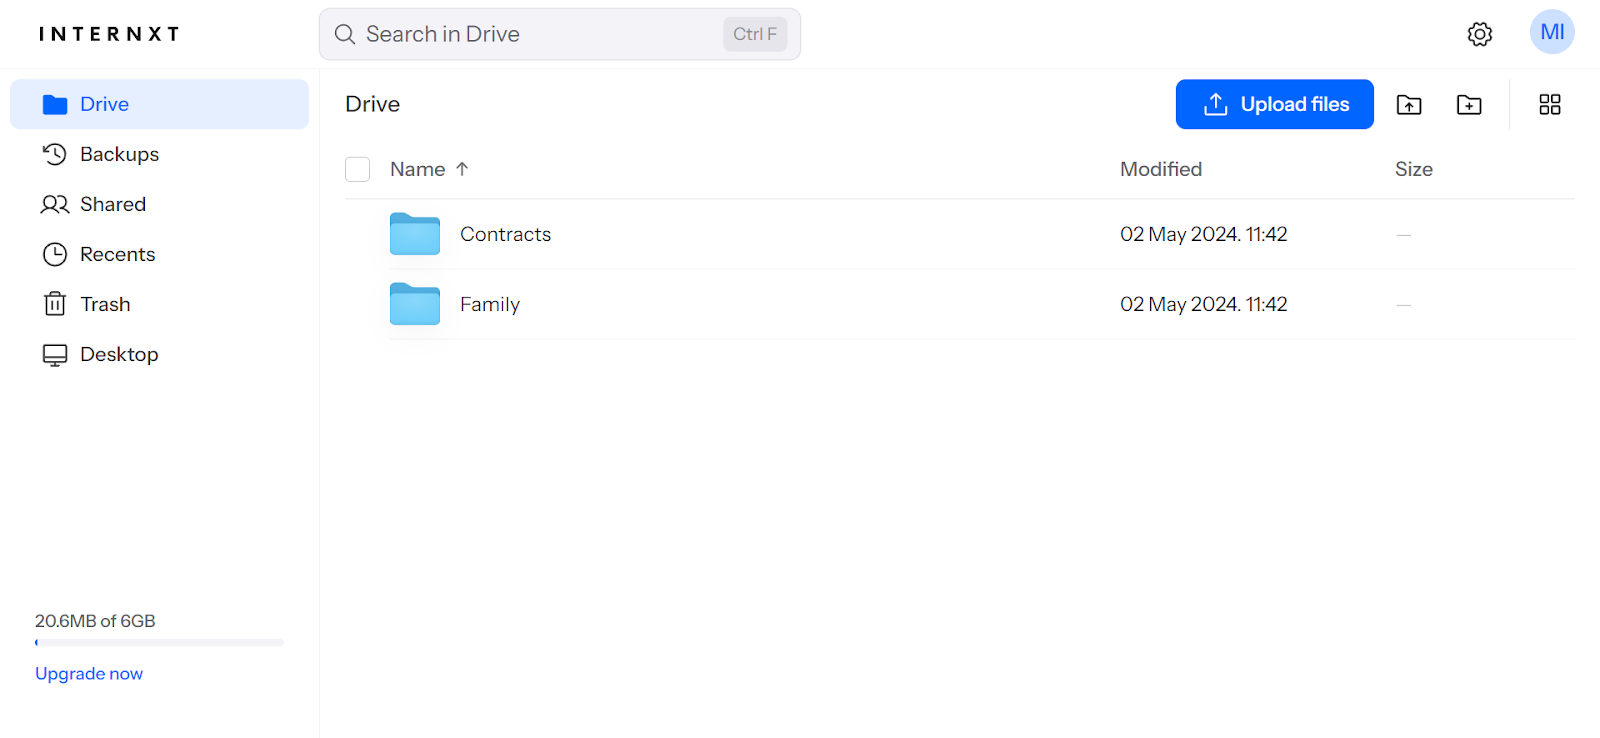 Internxt Drive interface